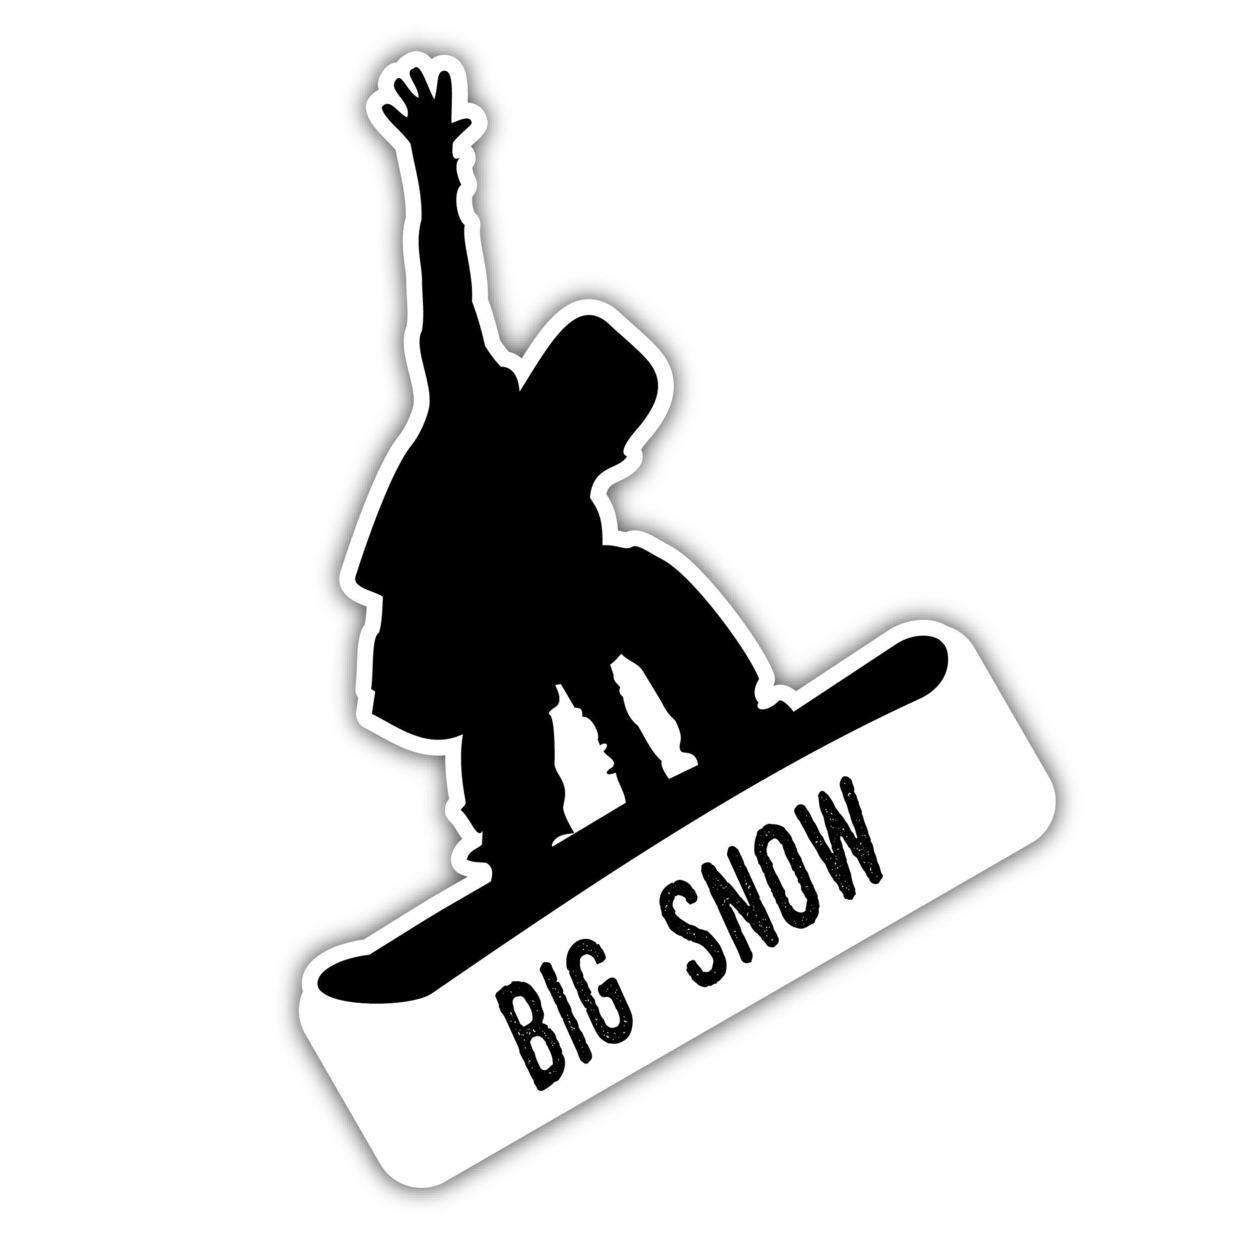 Big Snow Michigan Ski Adventures Souvenir 4 Inch Vinyl Decal Sticker Board Design